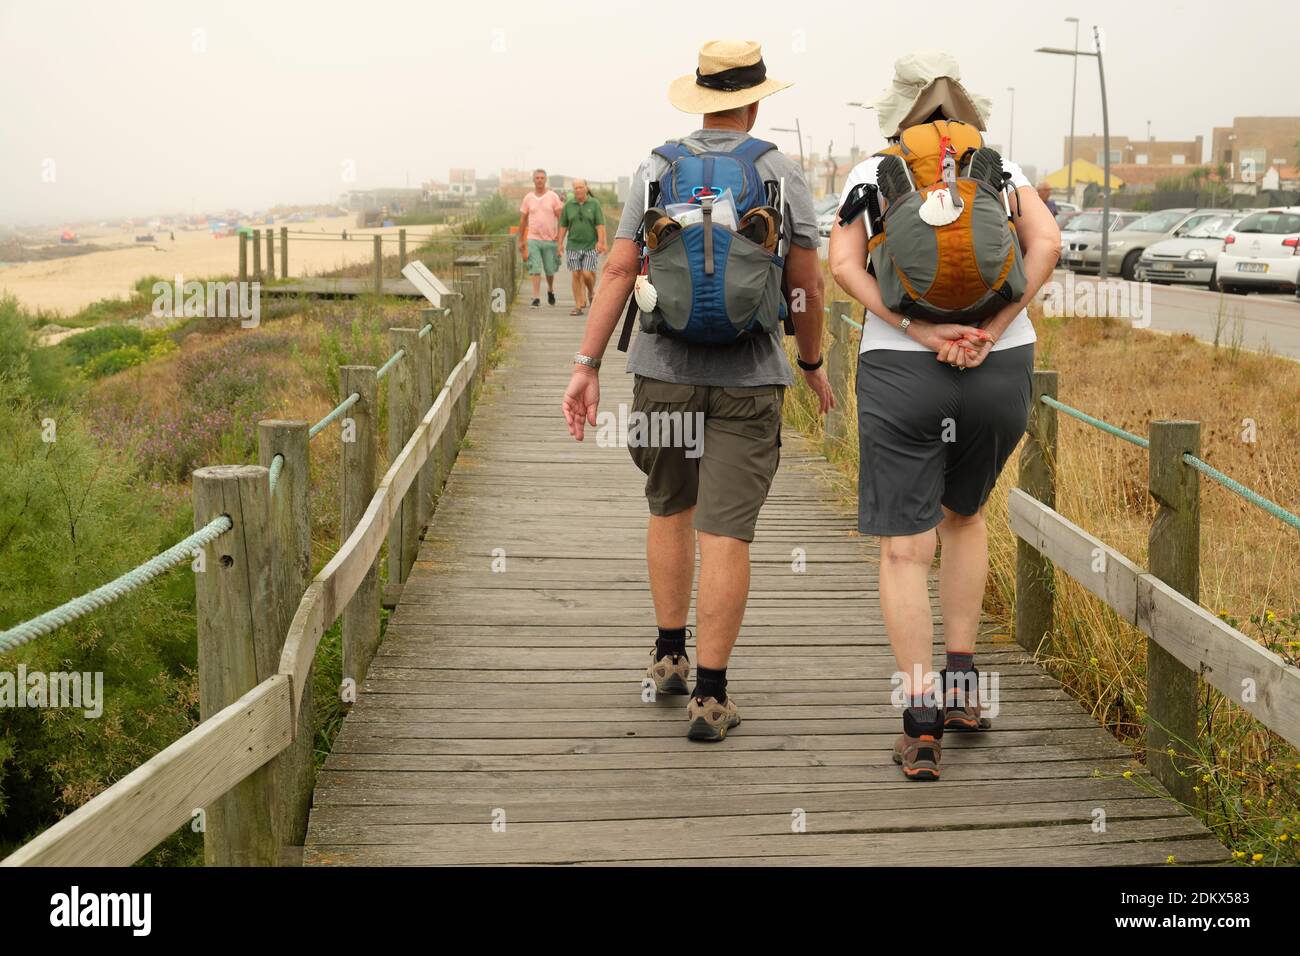 A couple of pilgrims walking on a boardwalk during their pilgrimage along the Camino de Santiago Portugués (Portuguese Way of Saint James). Stock Photo